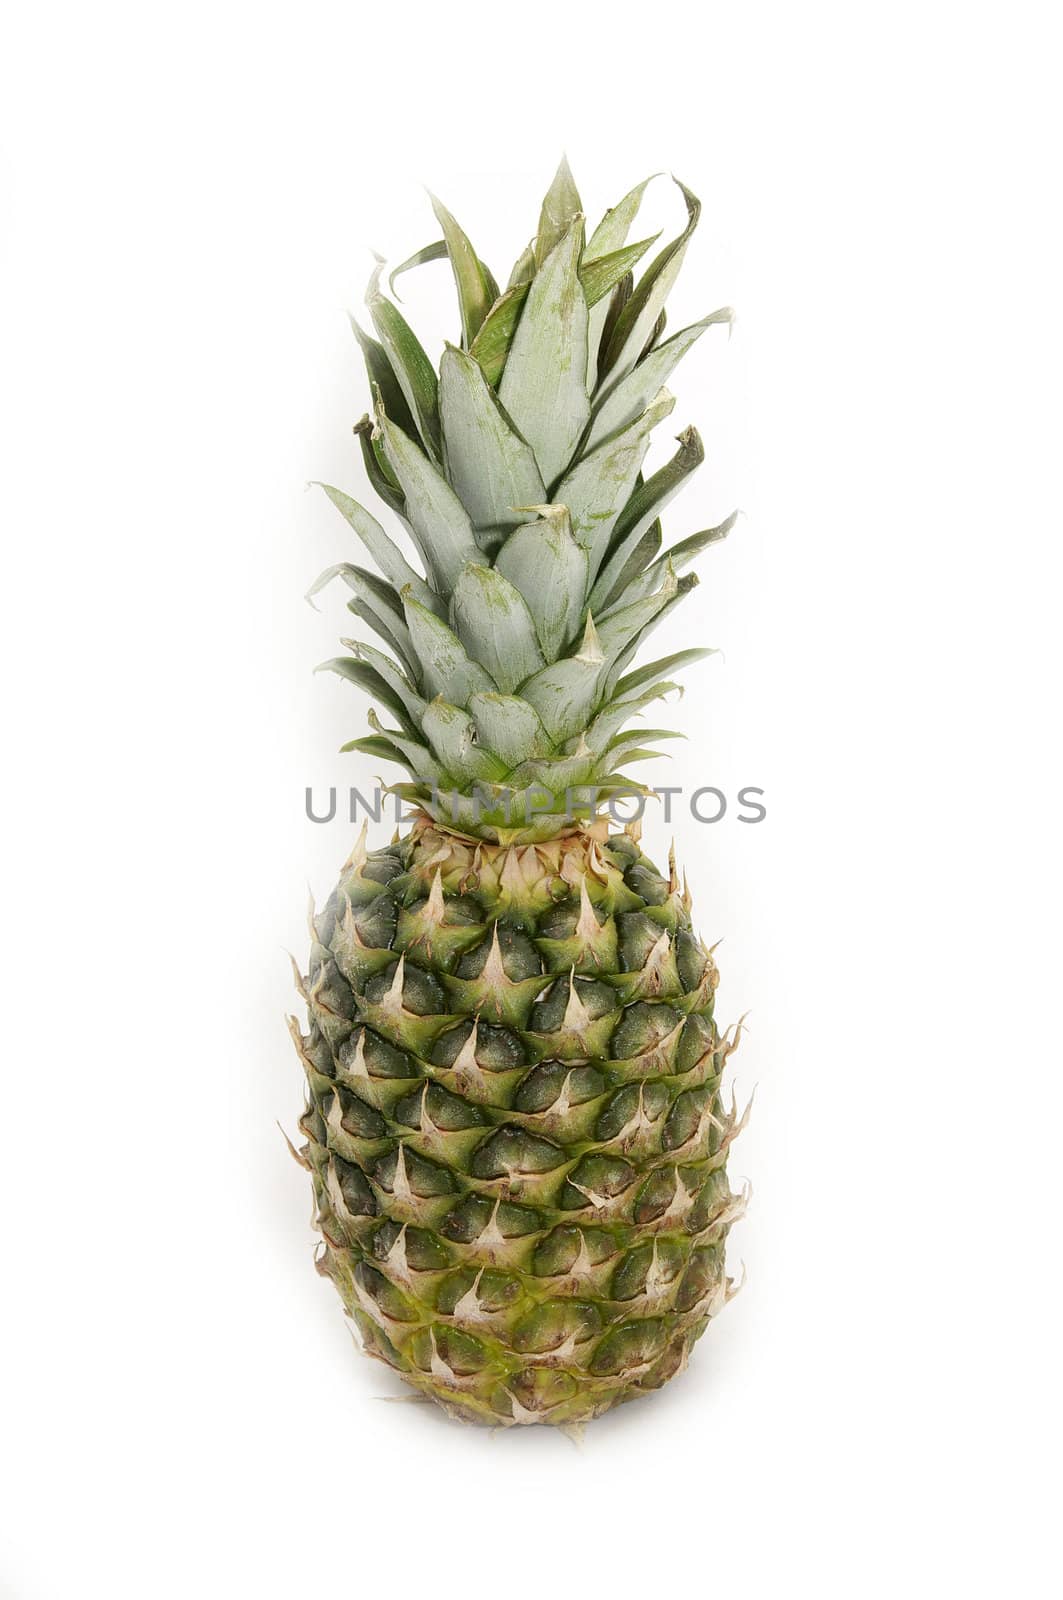 ripe pineapple closeup on white background